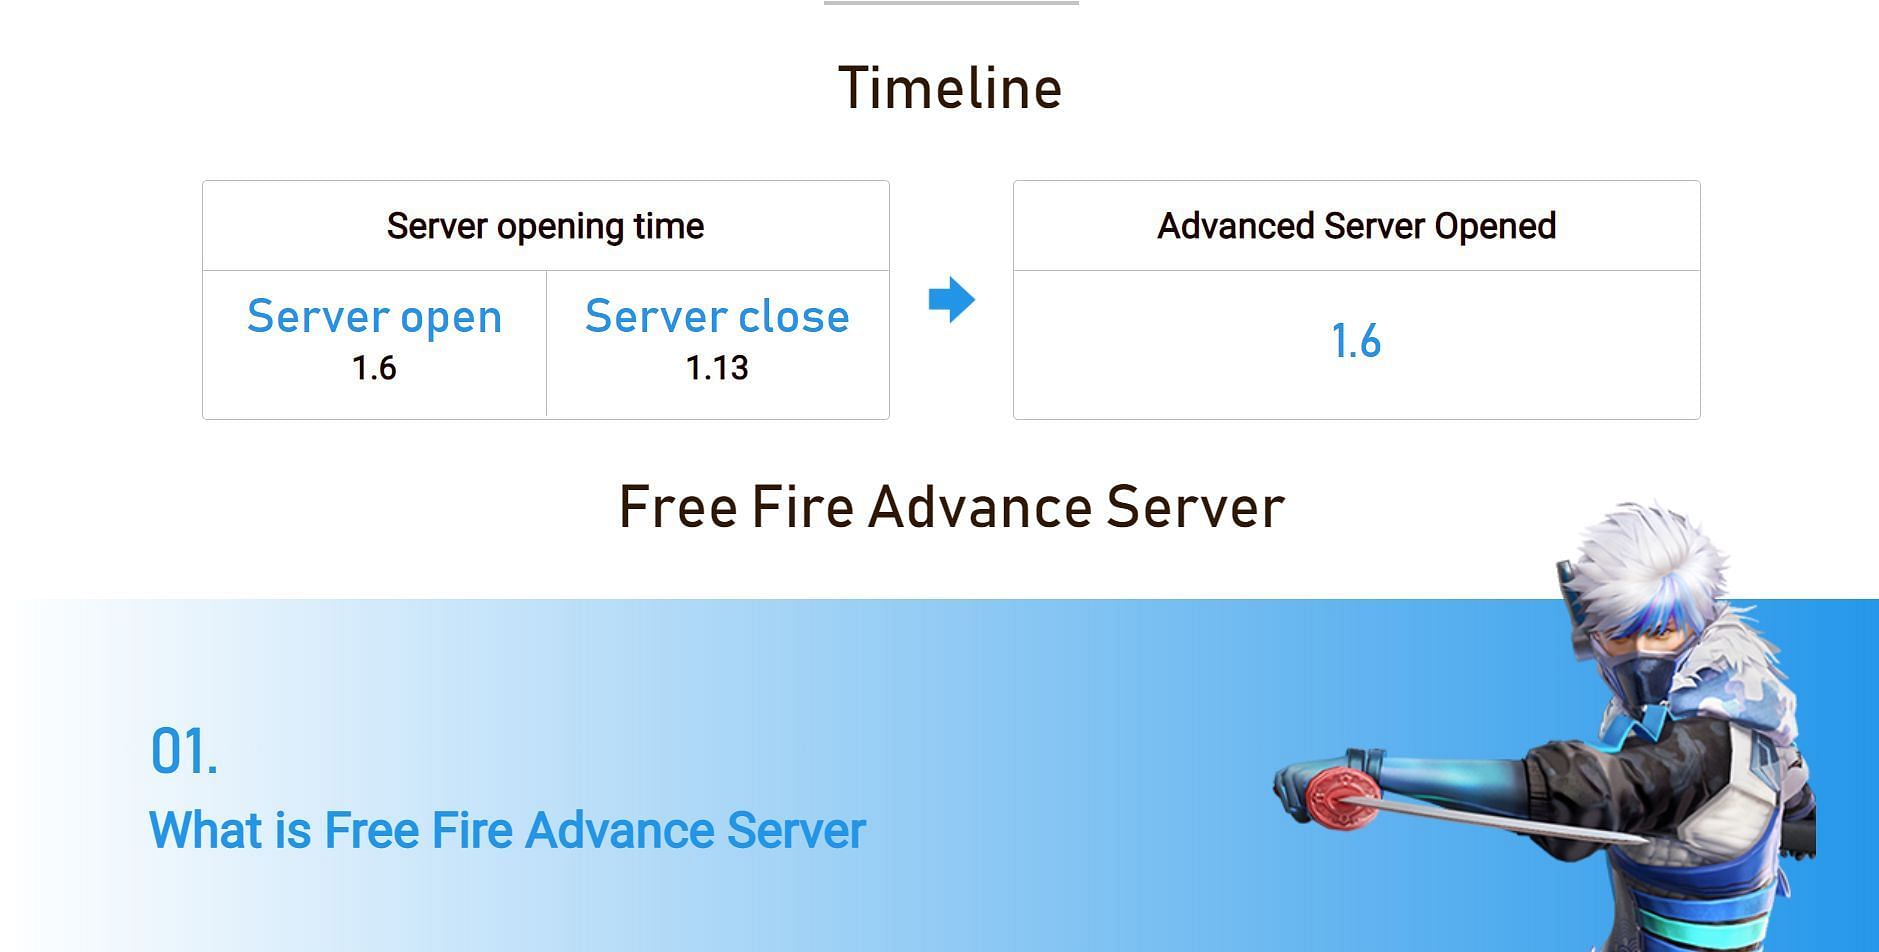 New Free Fire Advance Servers Starting Soon (Image via Free Fire)